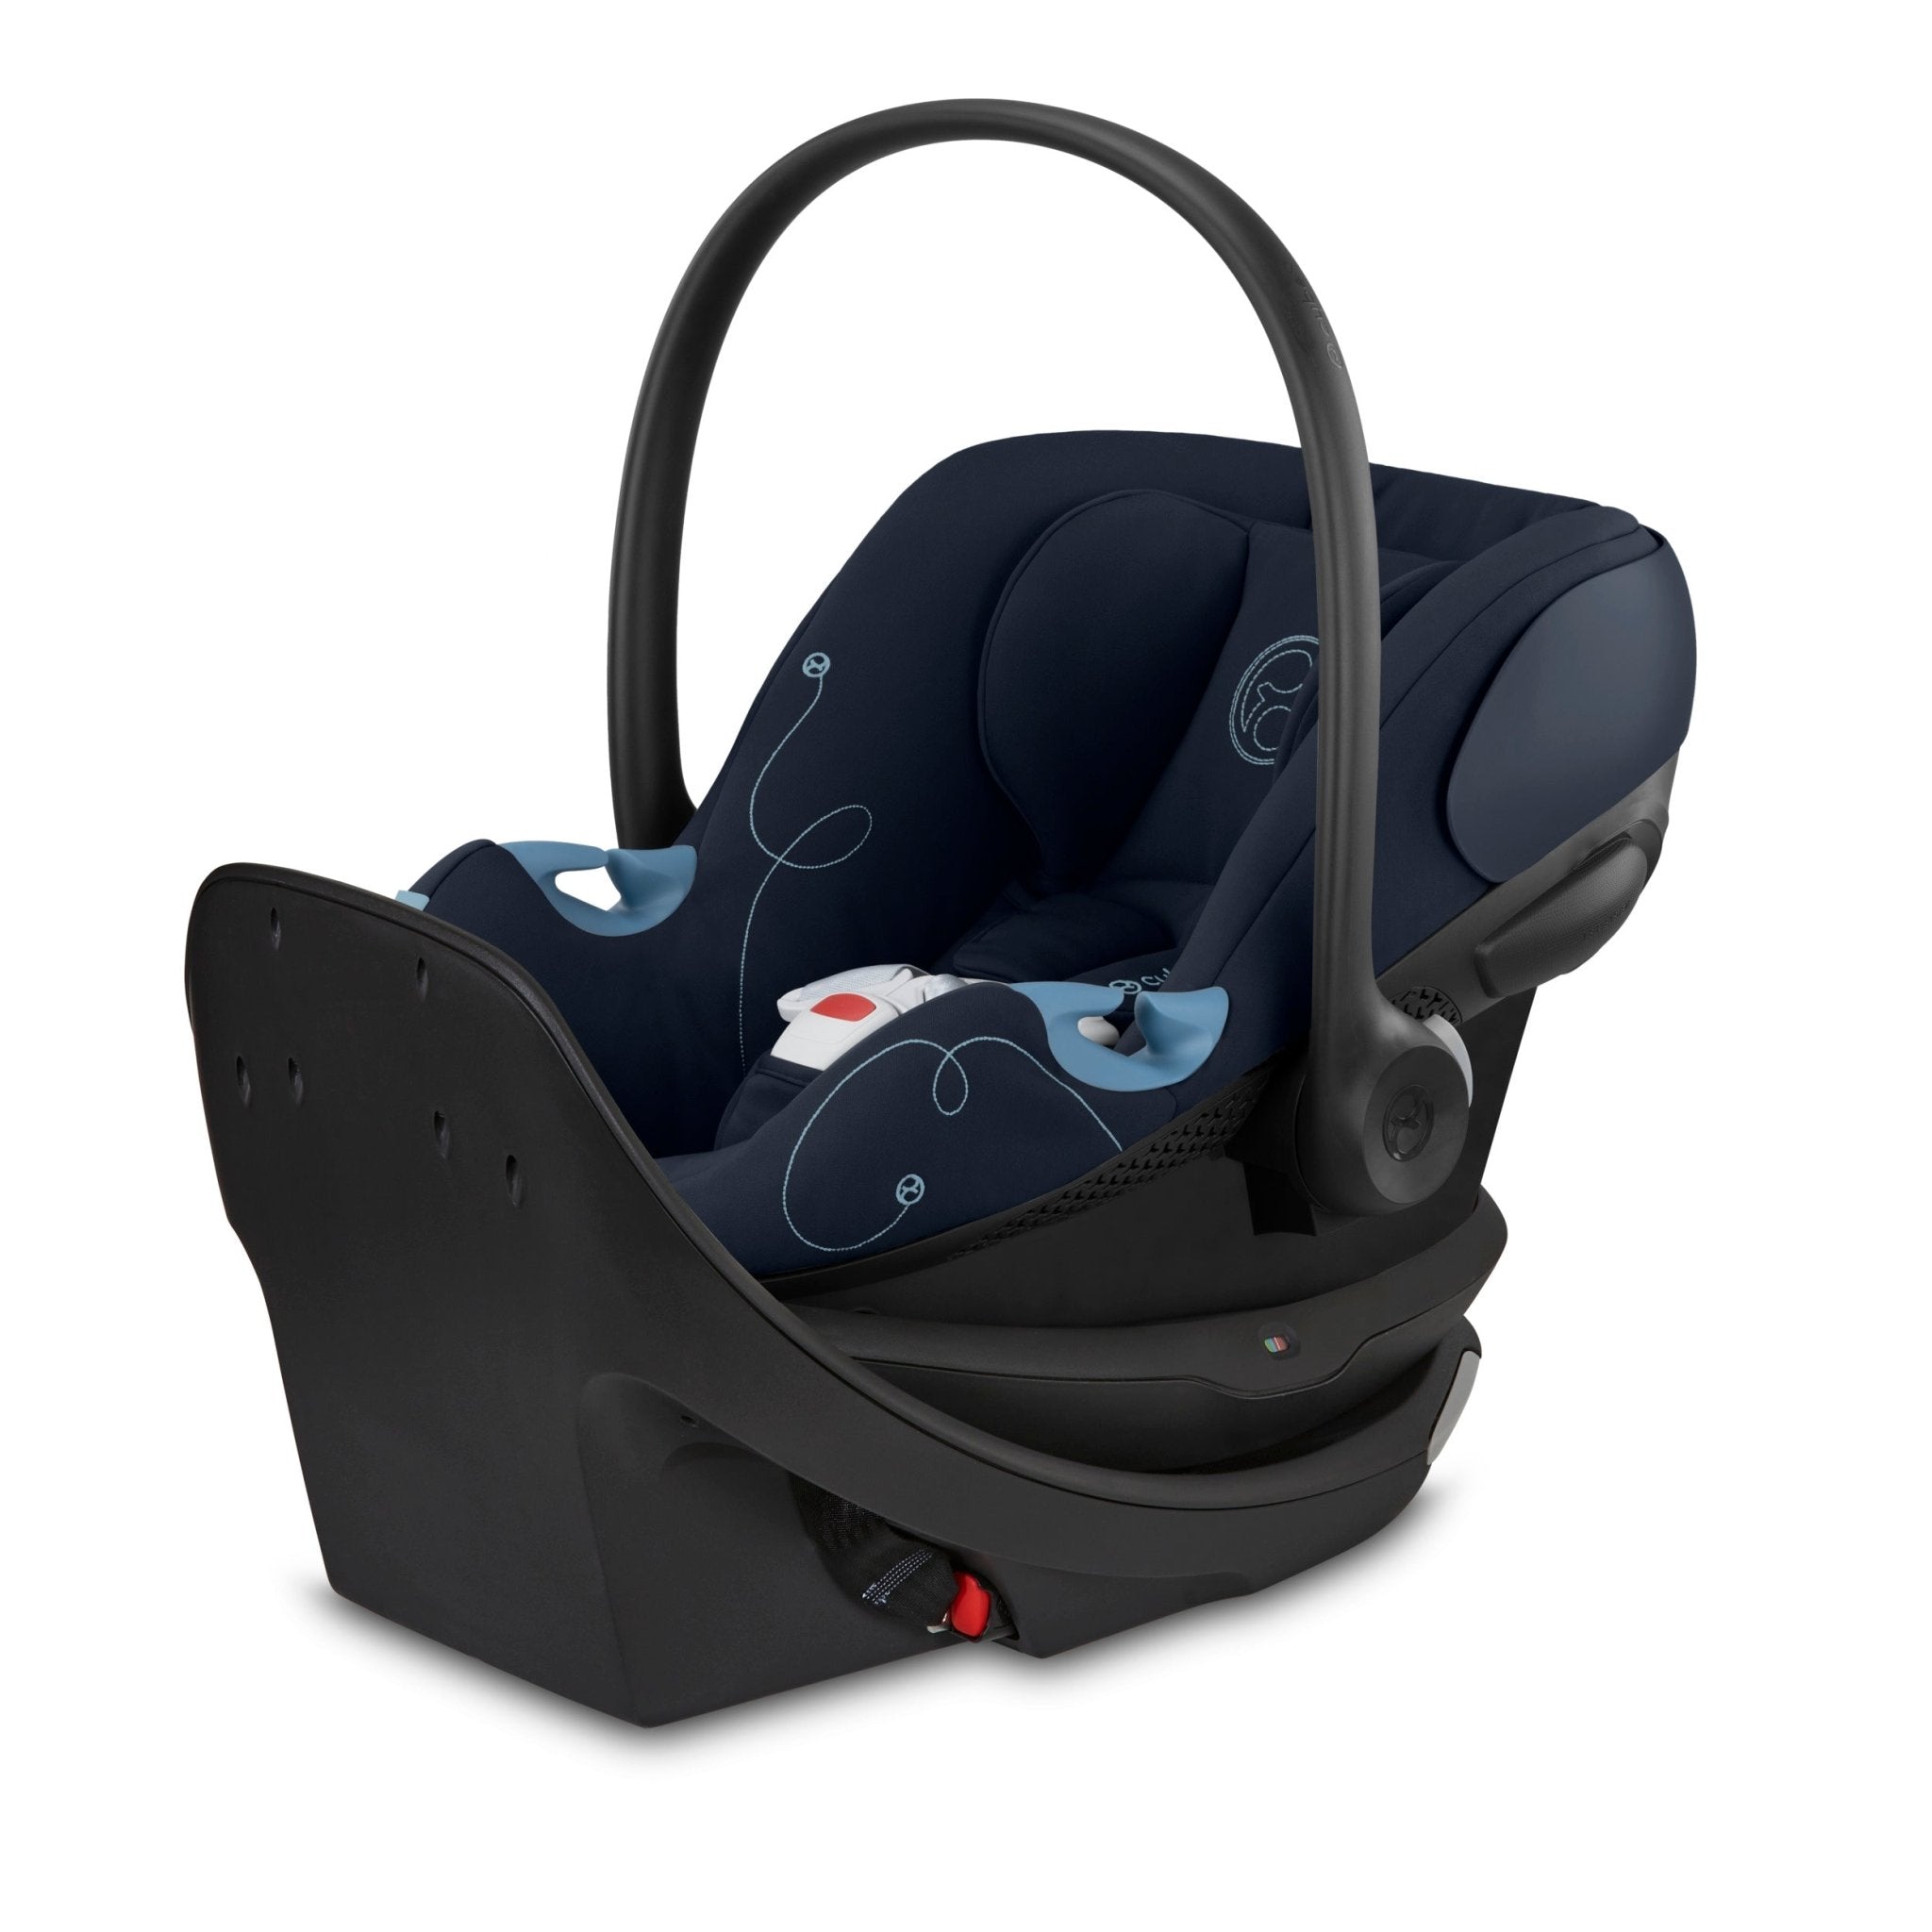 Cybex Aton G Swivel Infant Car Seat - ANB Baby -4063846381333$300 - $500